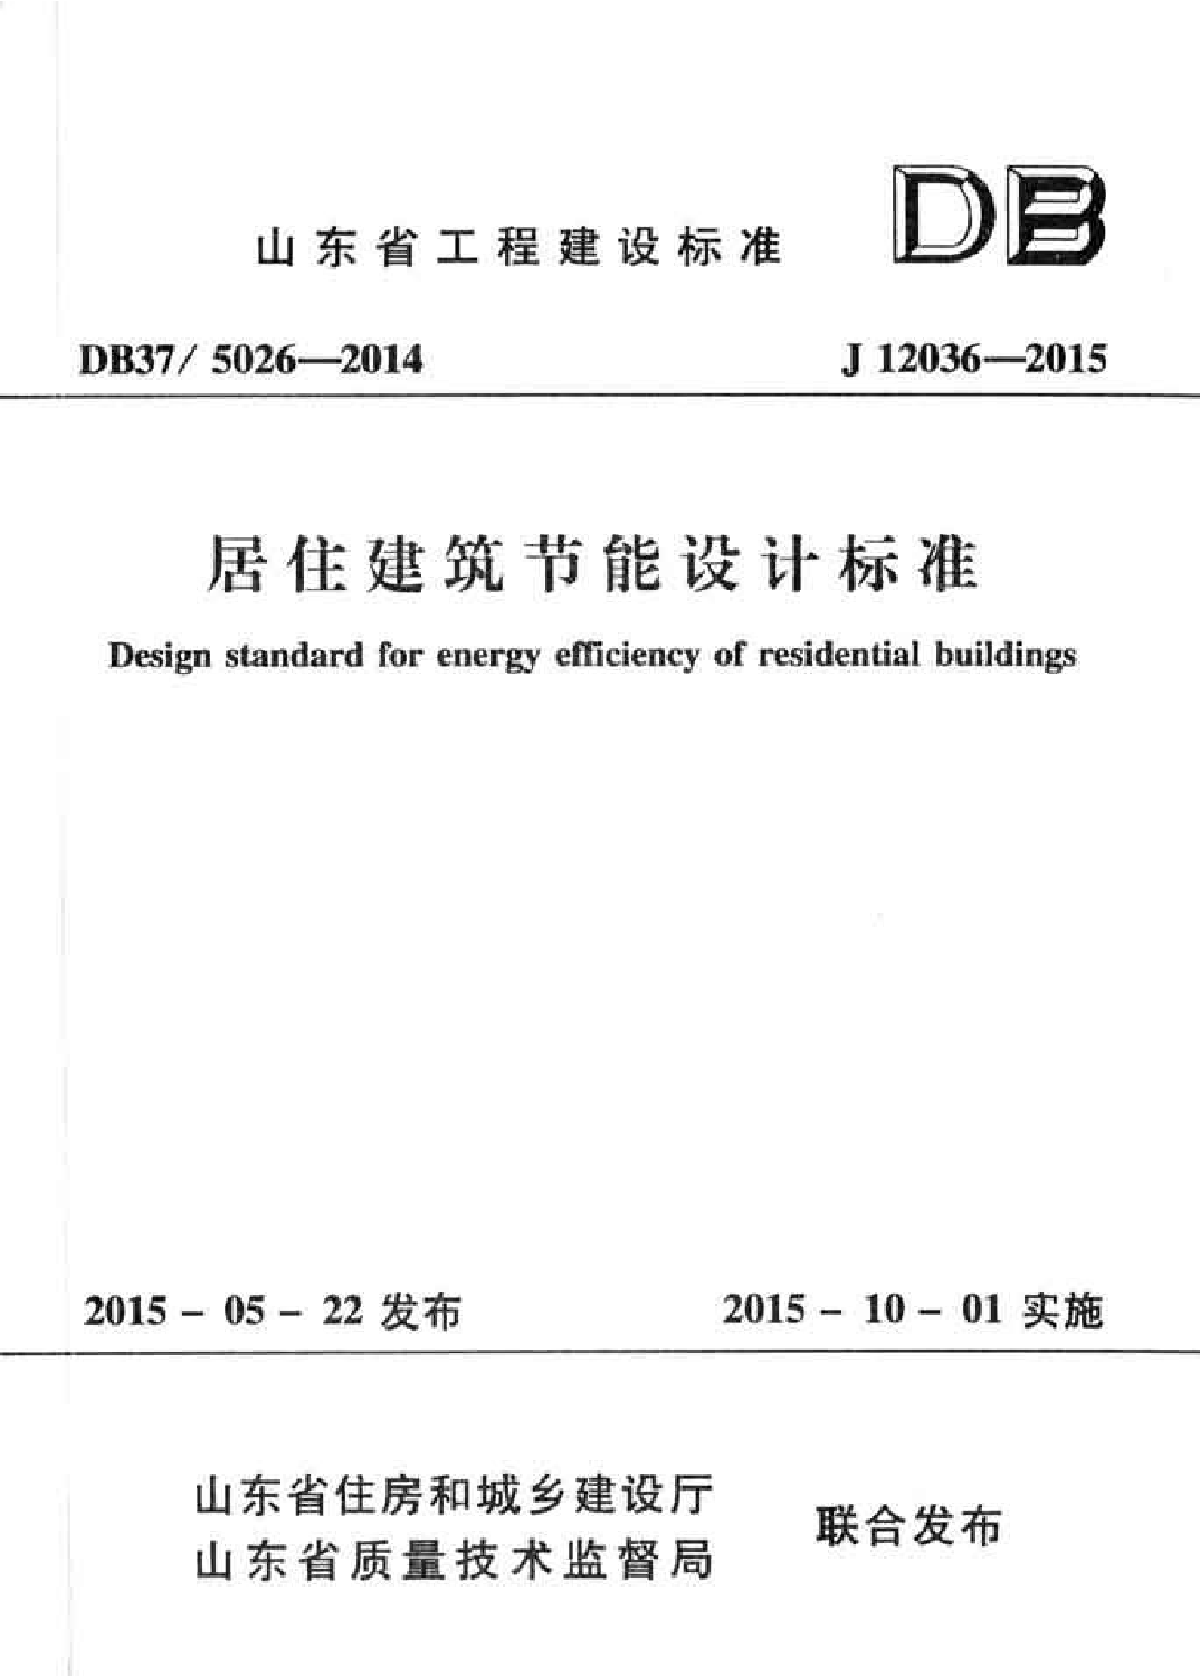 DB375026-2014山东省居住建筑节能设计标准